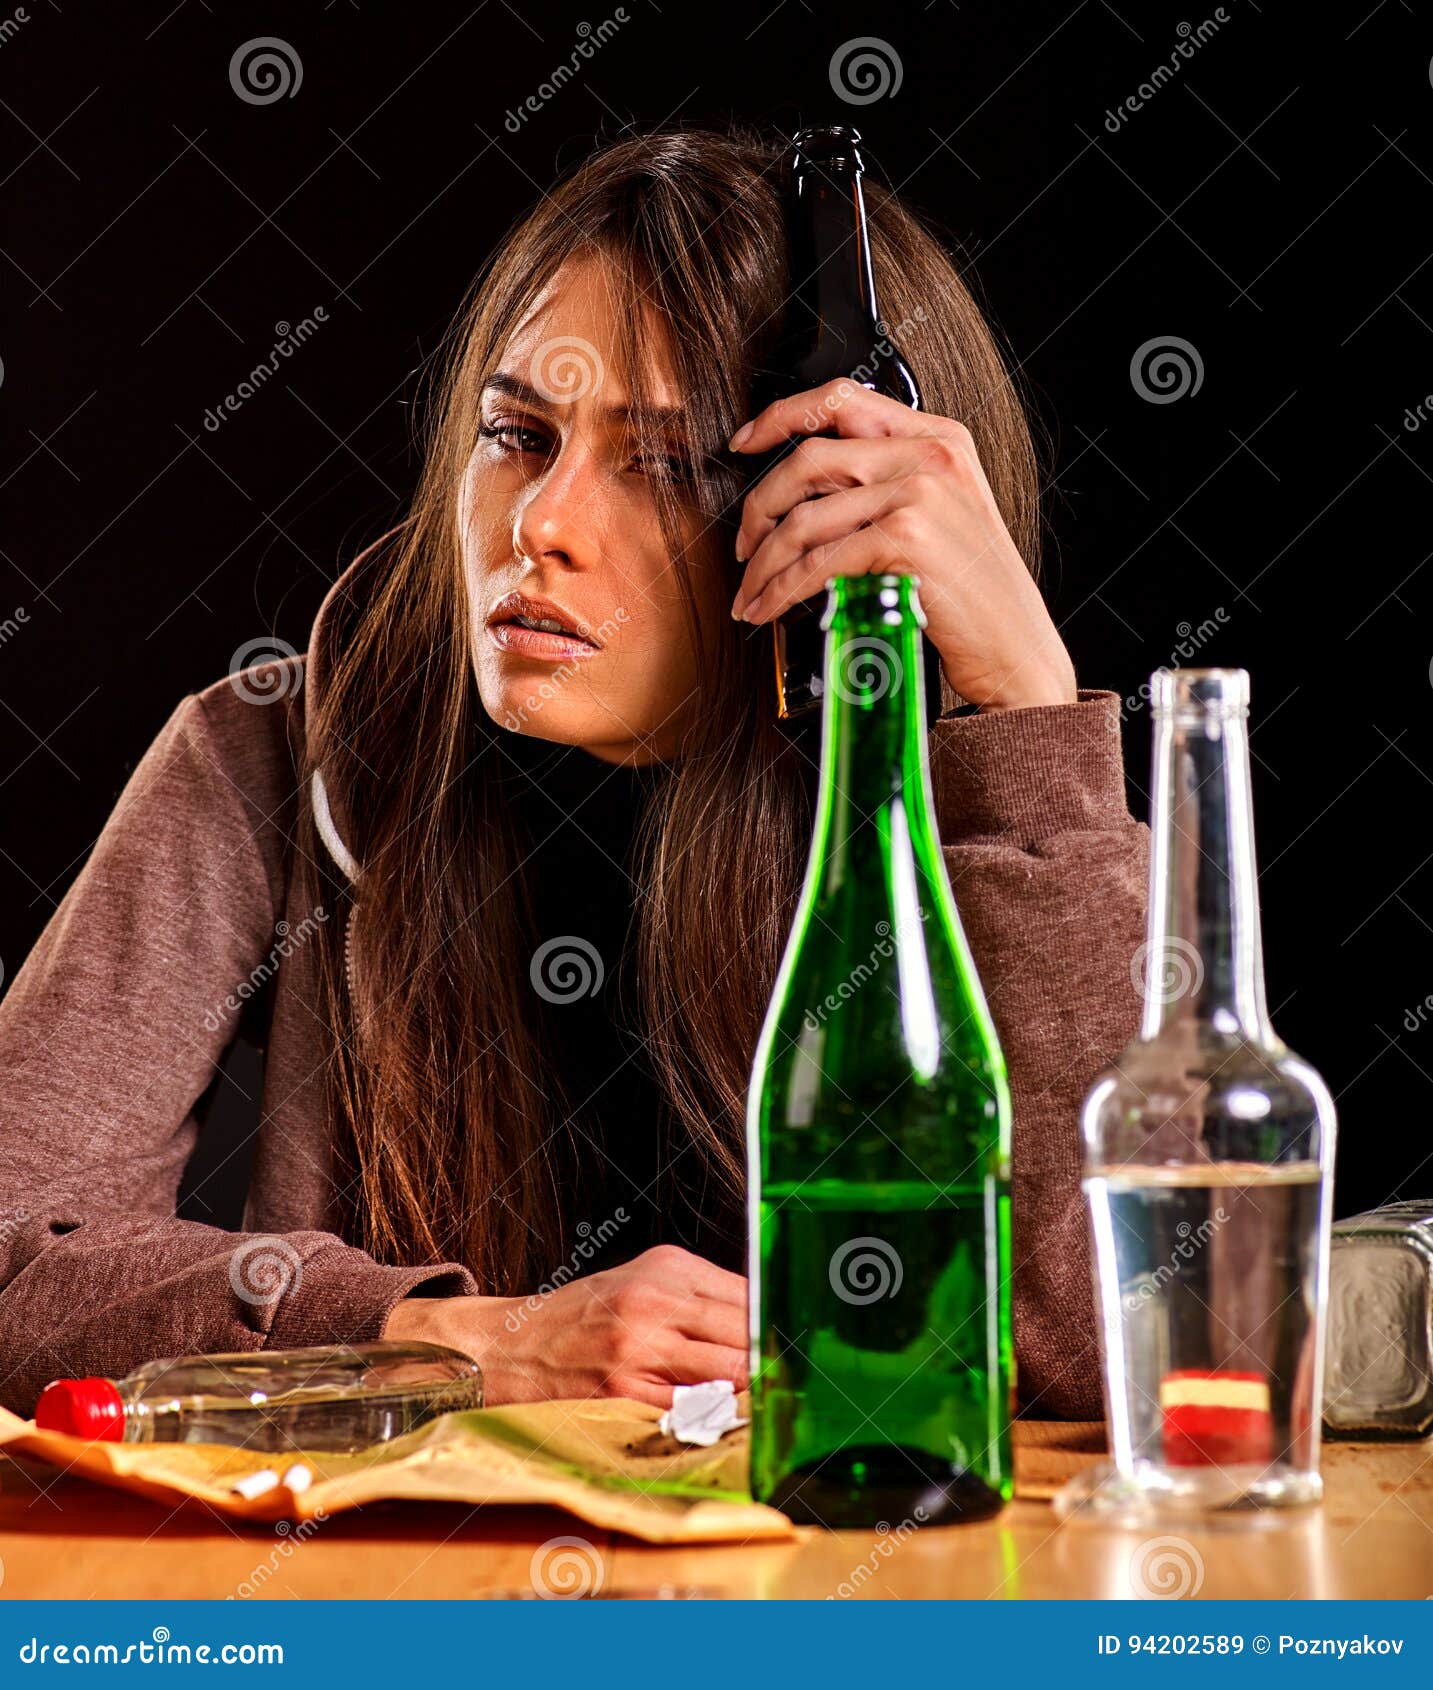 Alcoholism a Social Problem